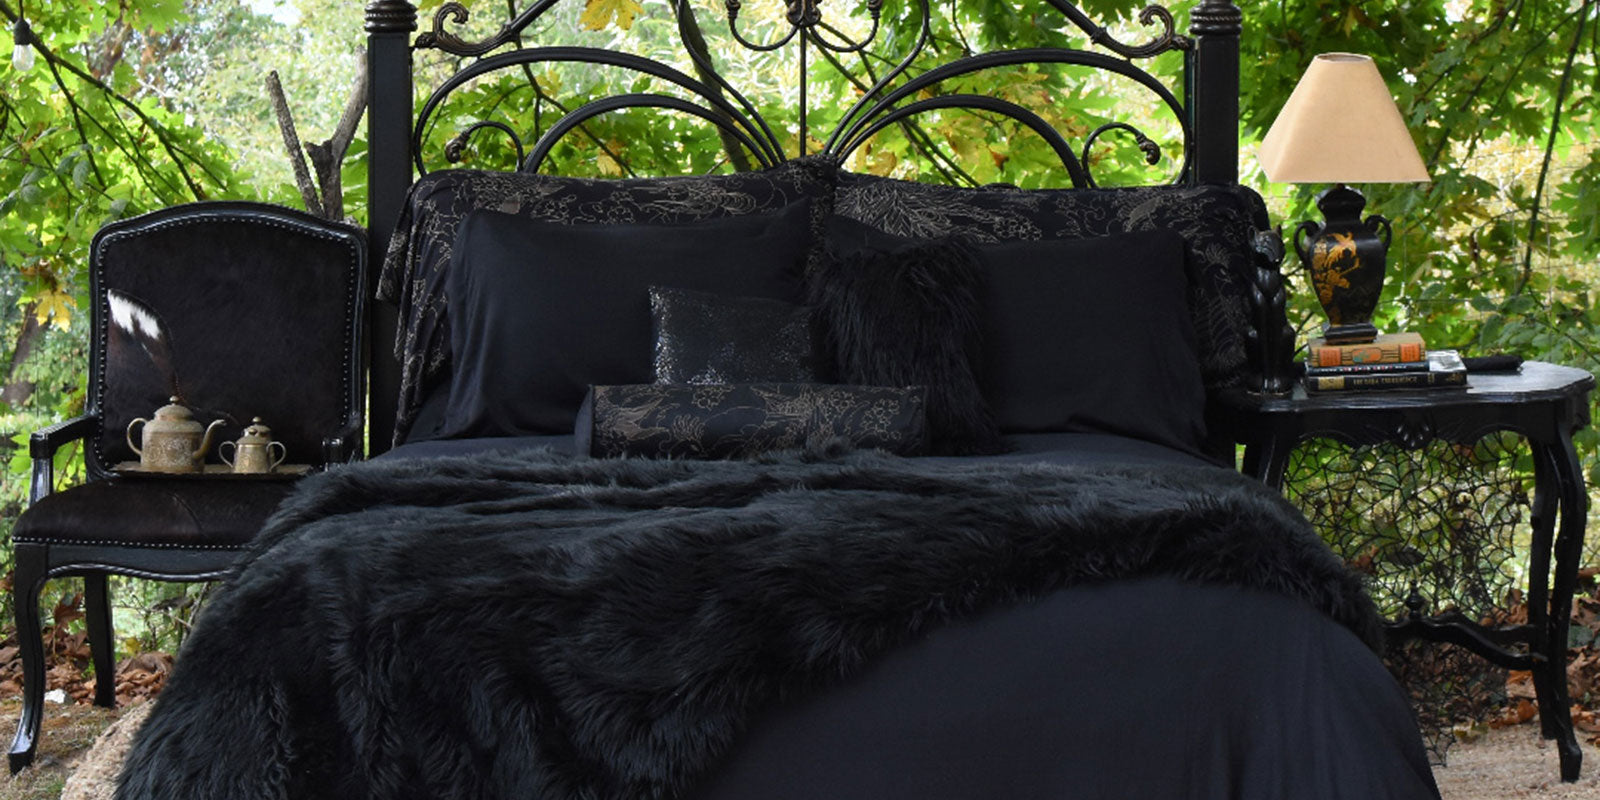 Black Bedding Bamboo Sheets Cotton Luxury